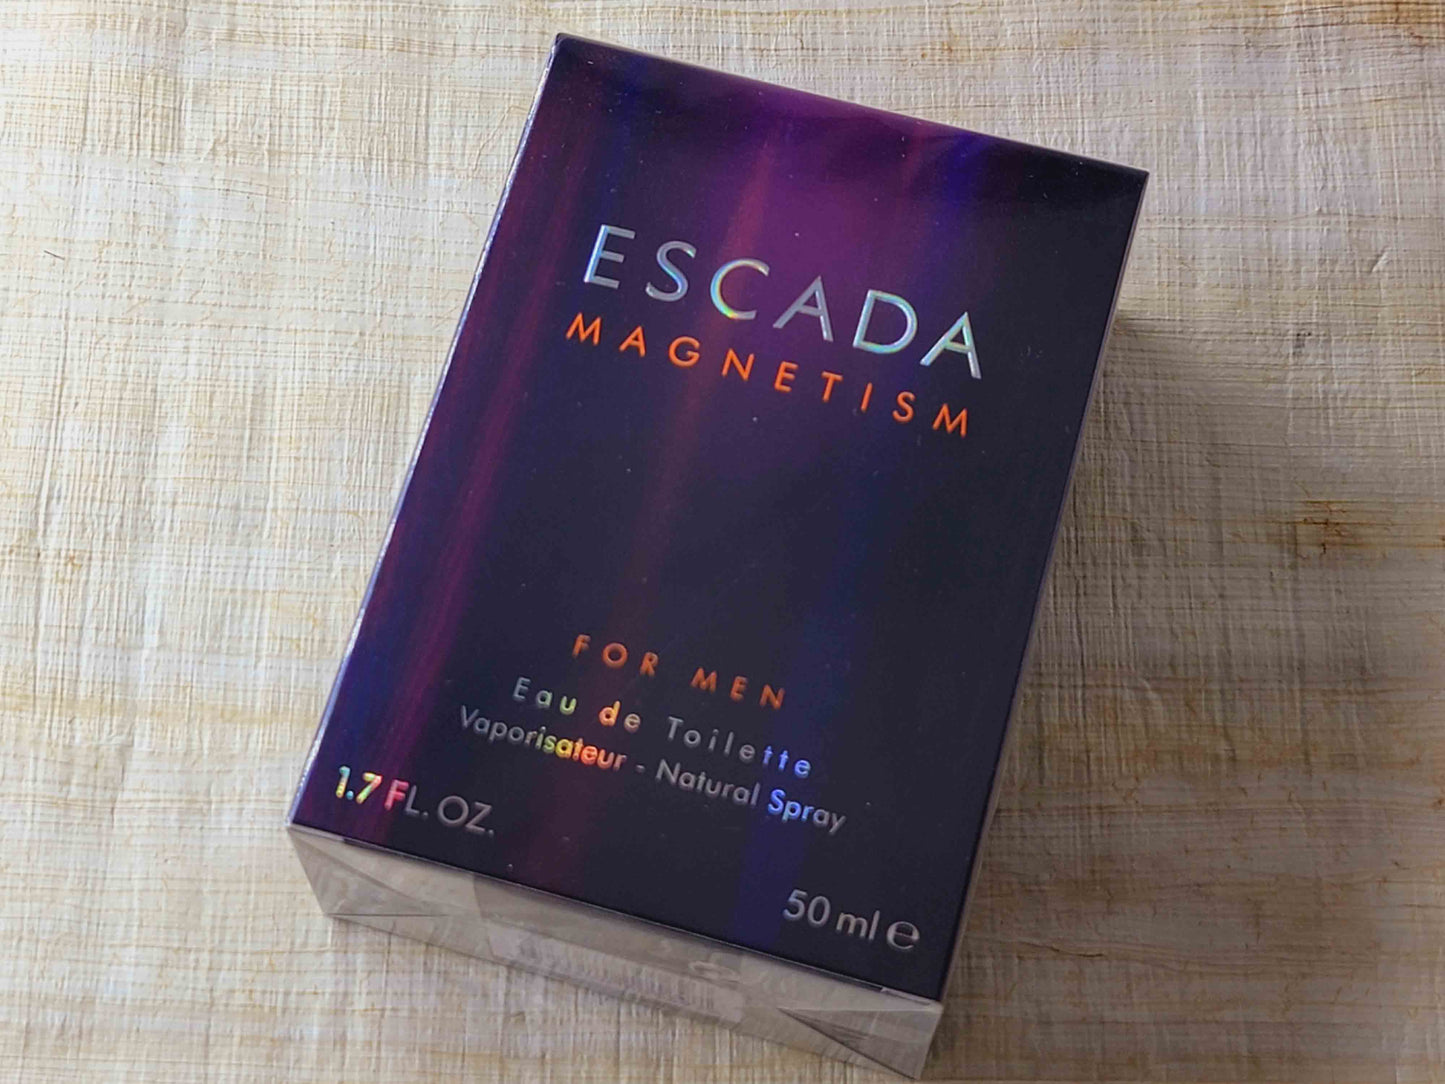 Escada Magnetism for Men EDT Spray 100 ml 3.4 oz Or 50 ml 1.7 oz, Vintage